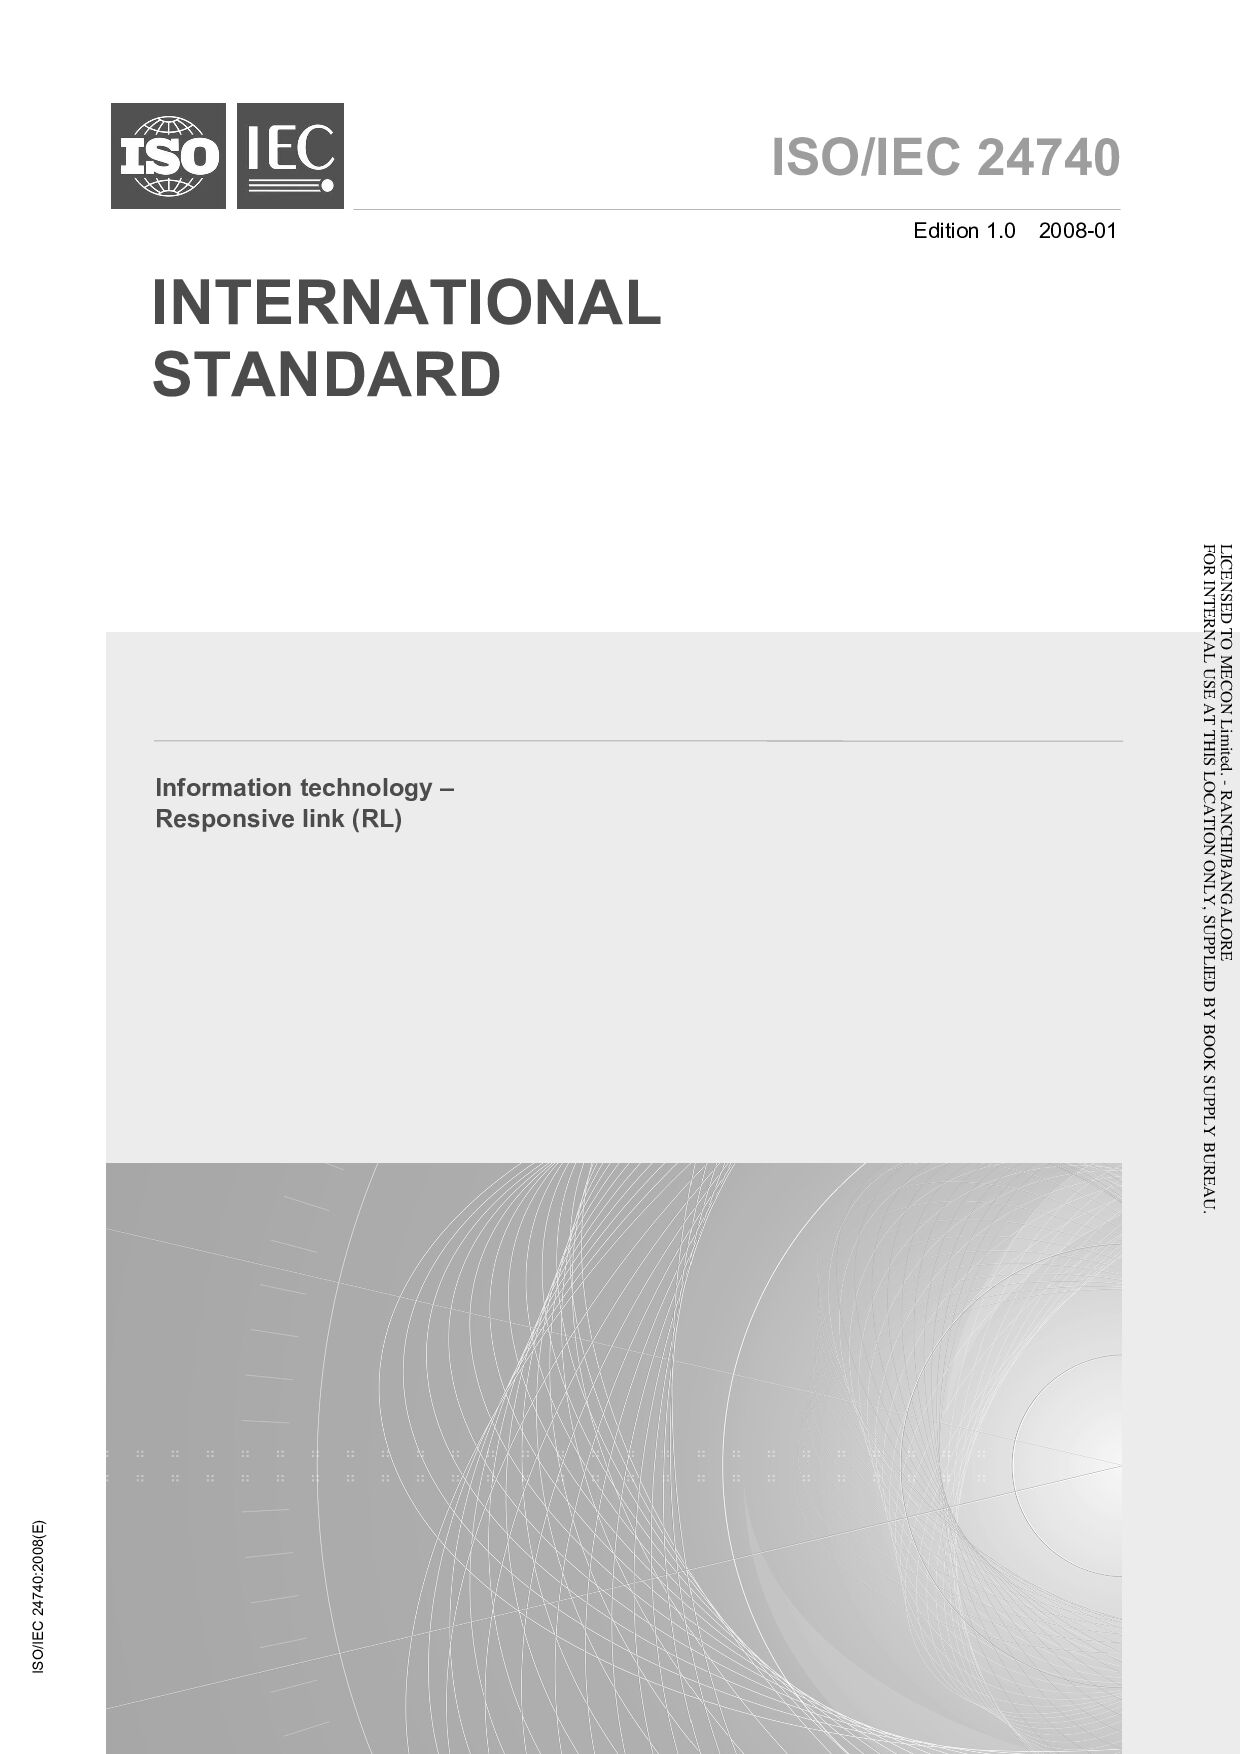 ISO/IEC 24740:2008